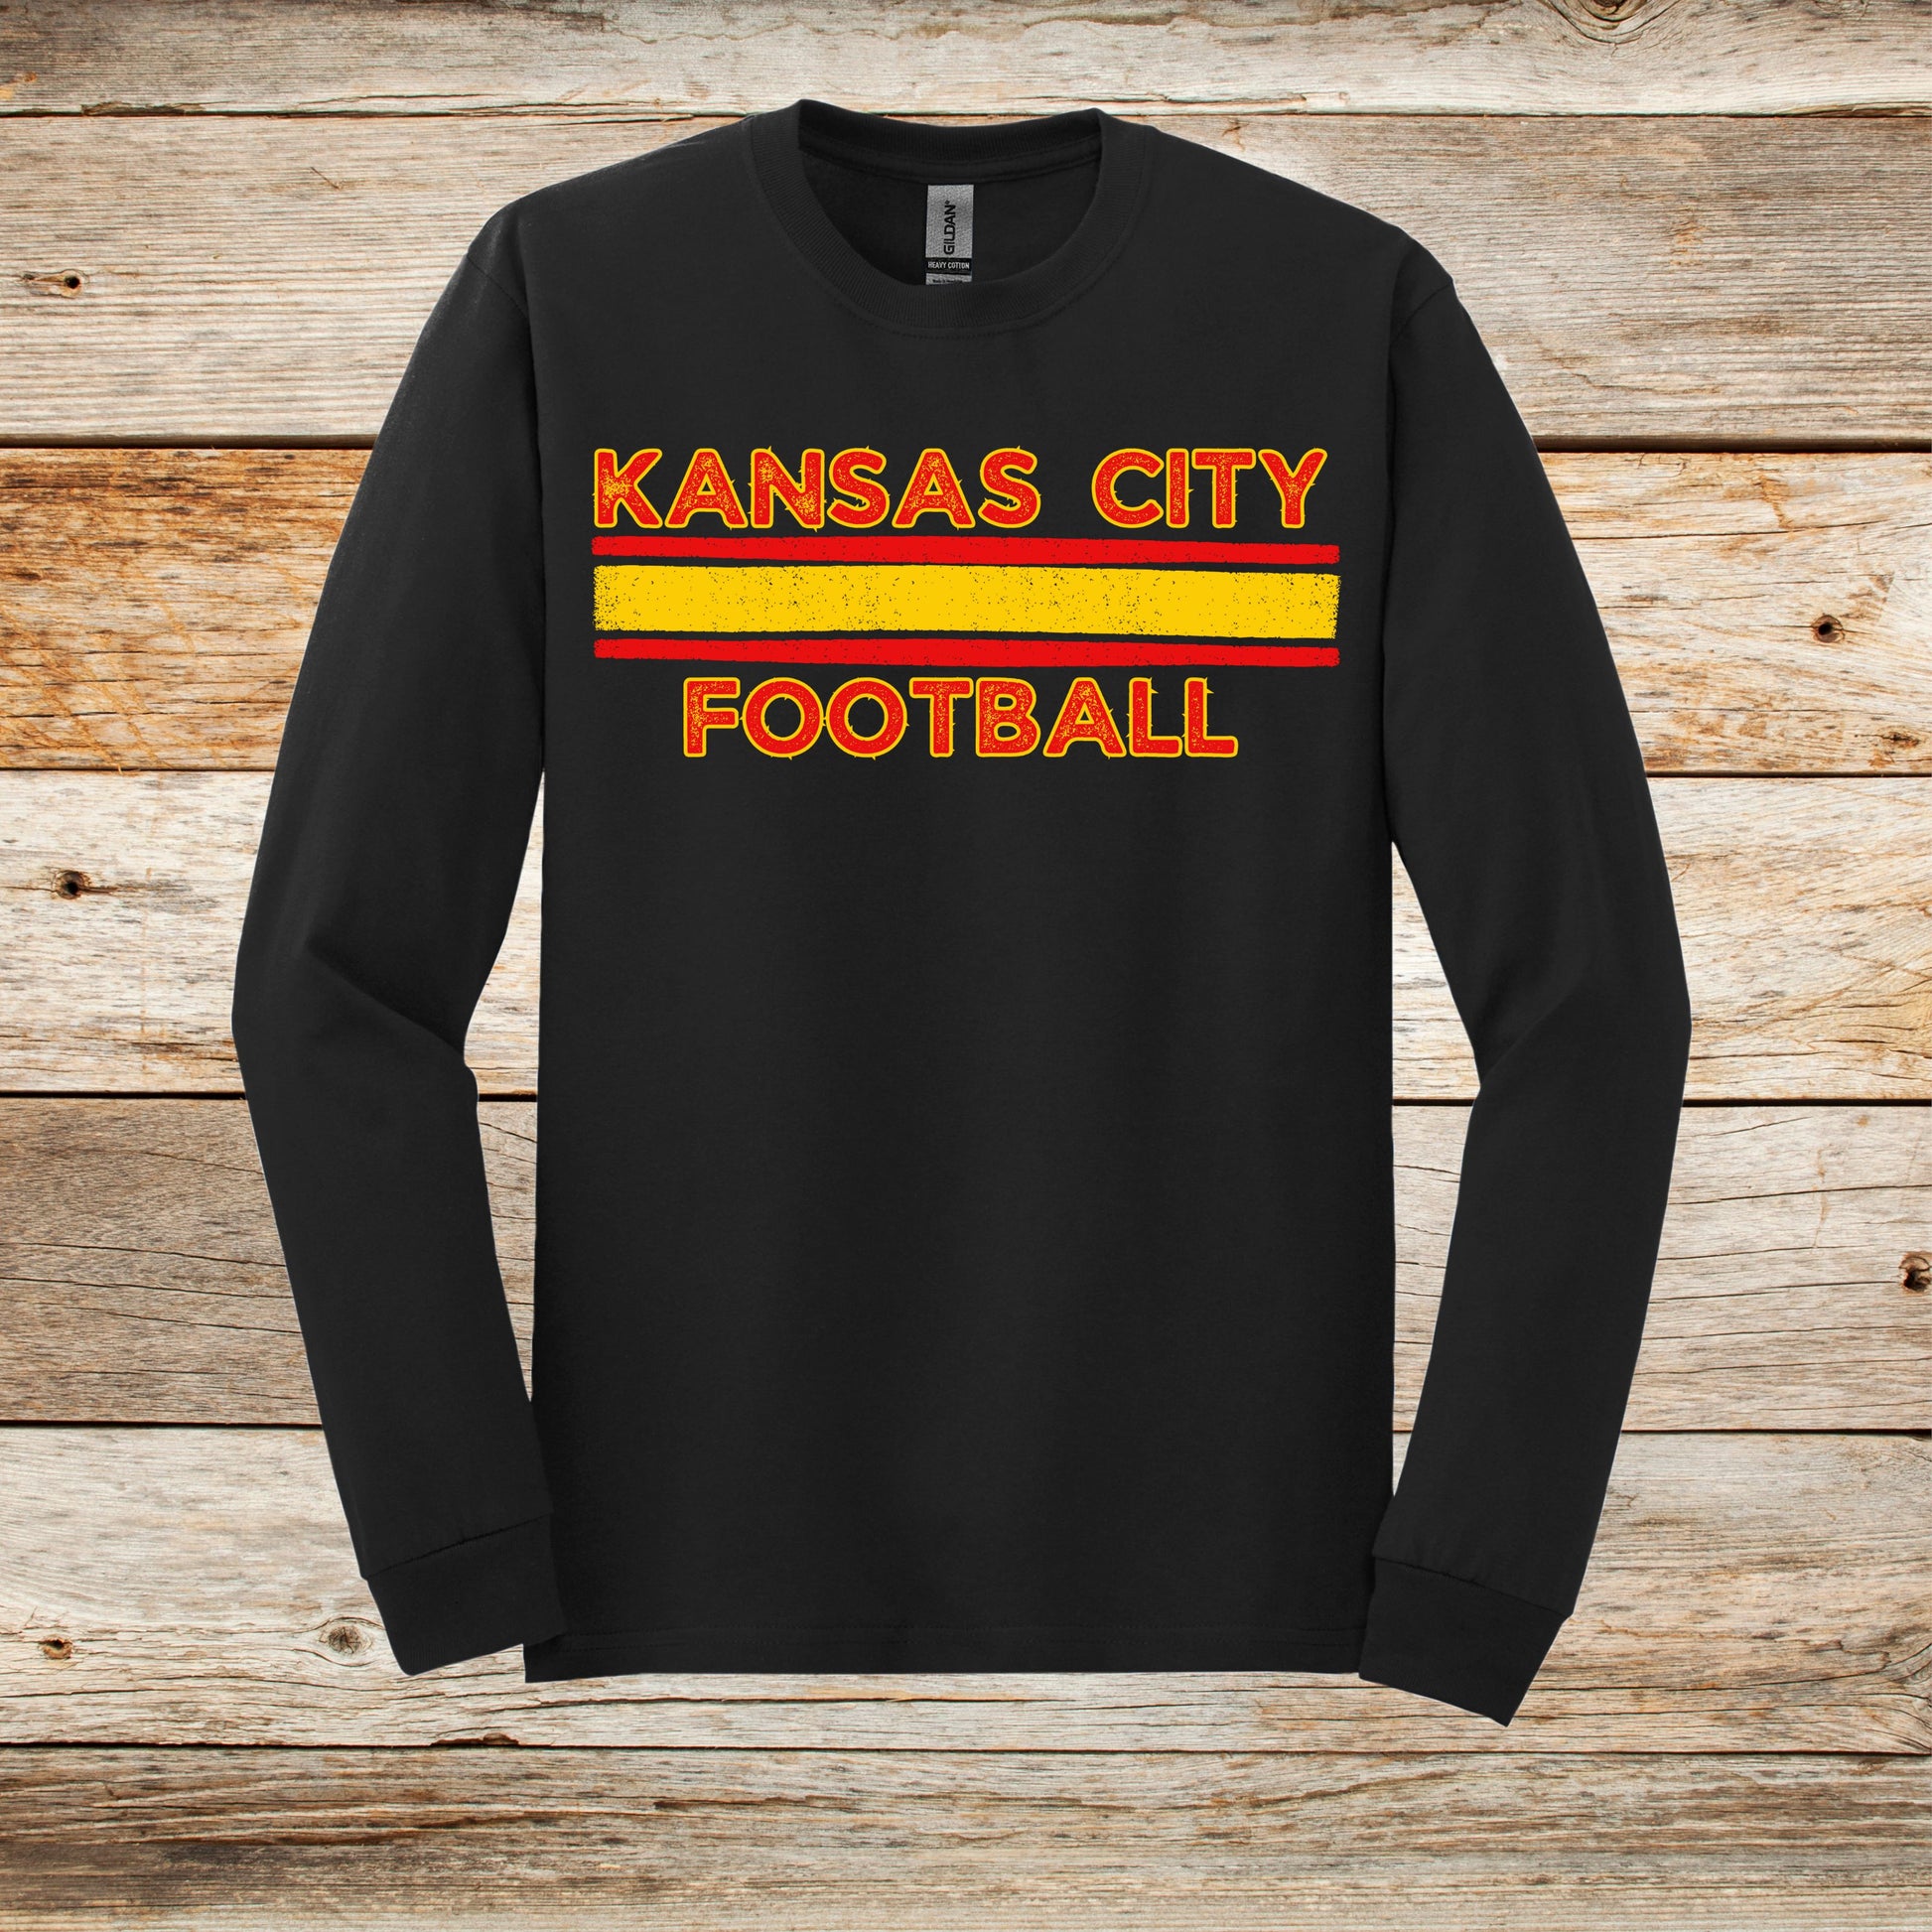 Football Long Sleeve T-Shirt - Kansas City Chiefs - Kansas City Football - Adult and Children's Tee Shirts - Sports Long Sleeve T-Shirts Graphic Avenue Black Adult Small 